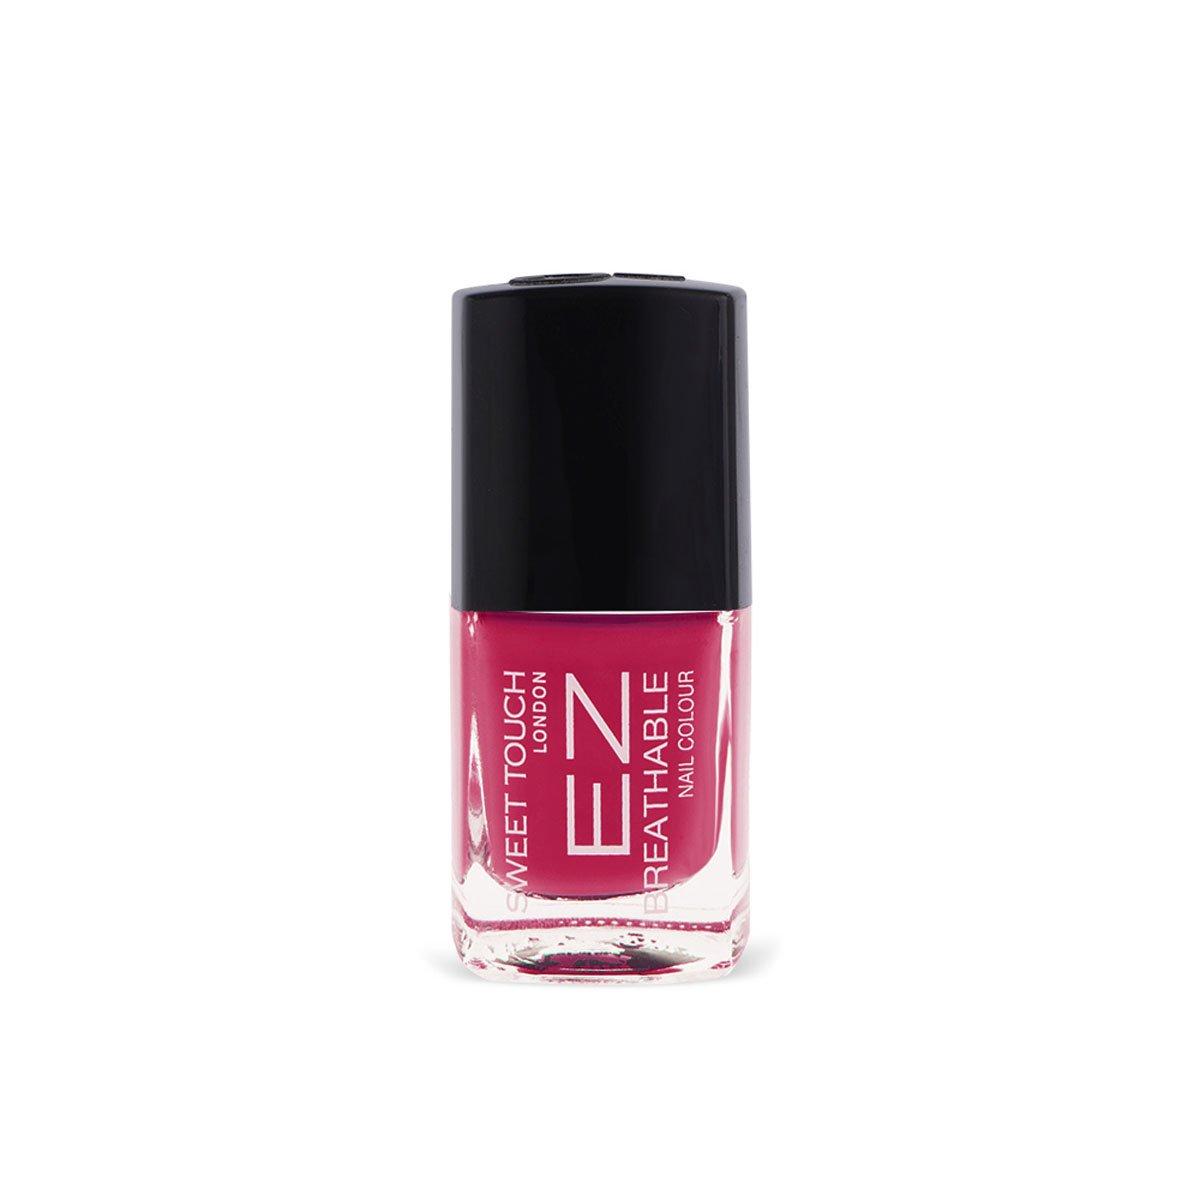 St London - Ez Breathable Nail Color - St218 - Hot Pink